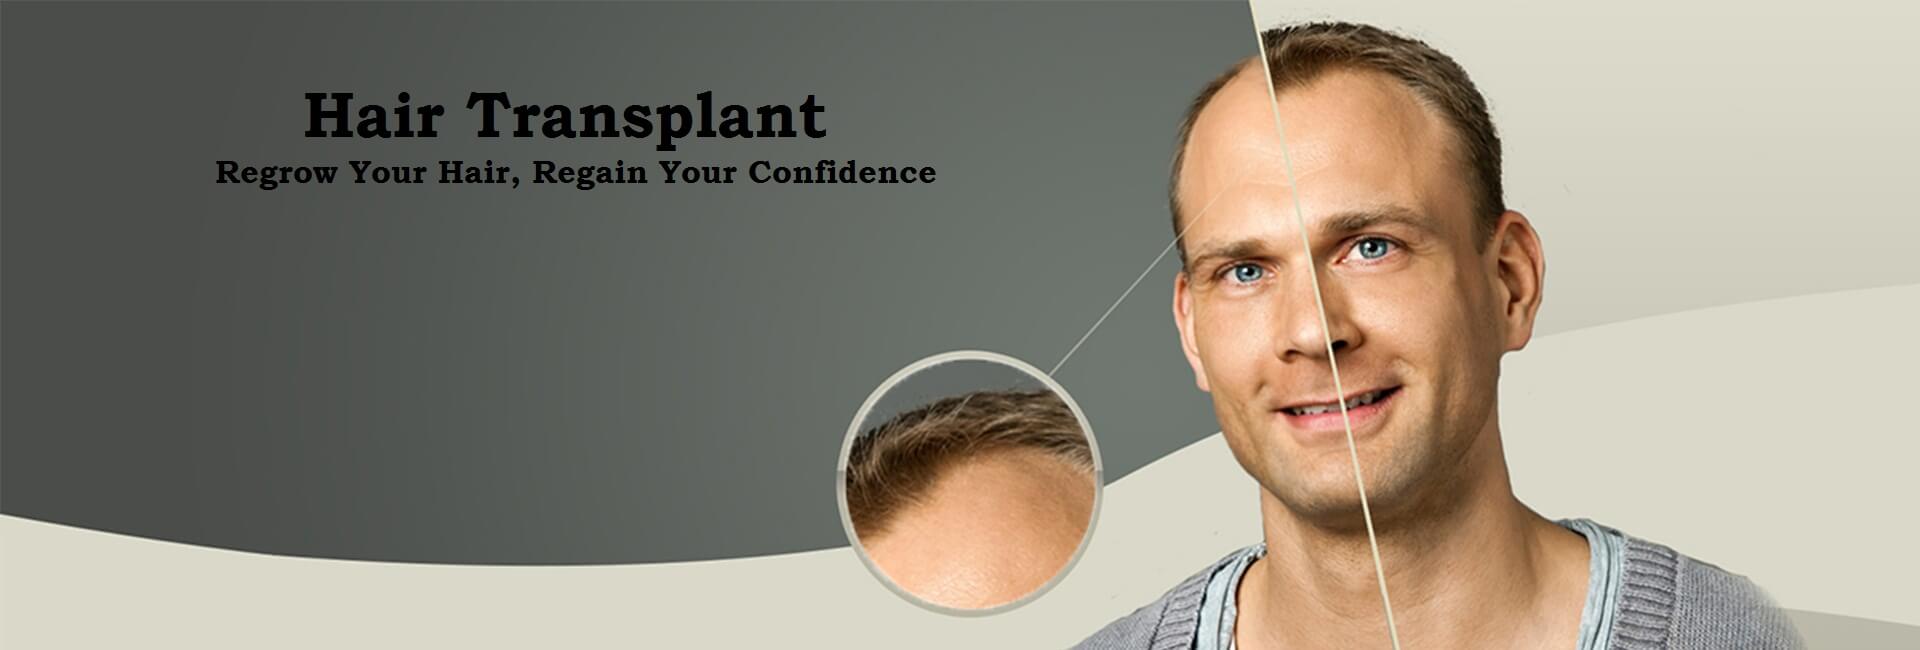 Hair Transplant: An Effective Hair Loss Treatment